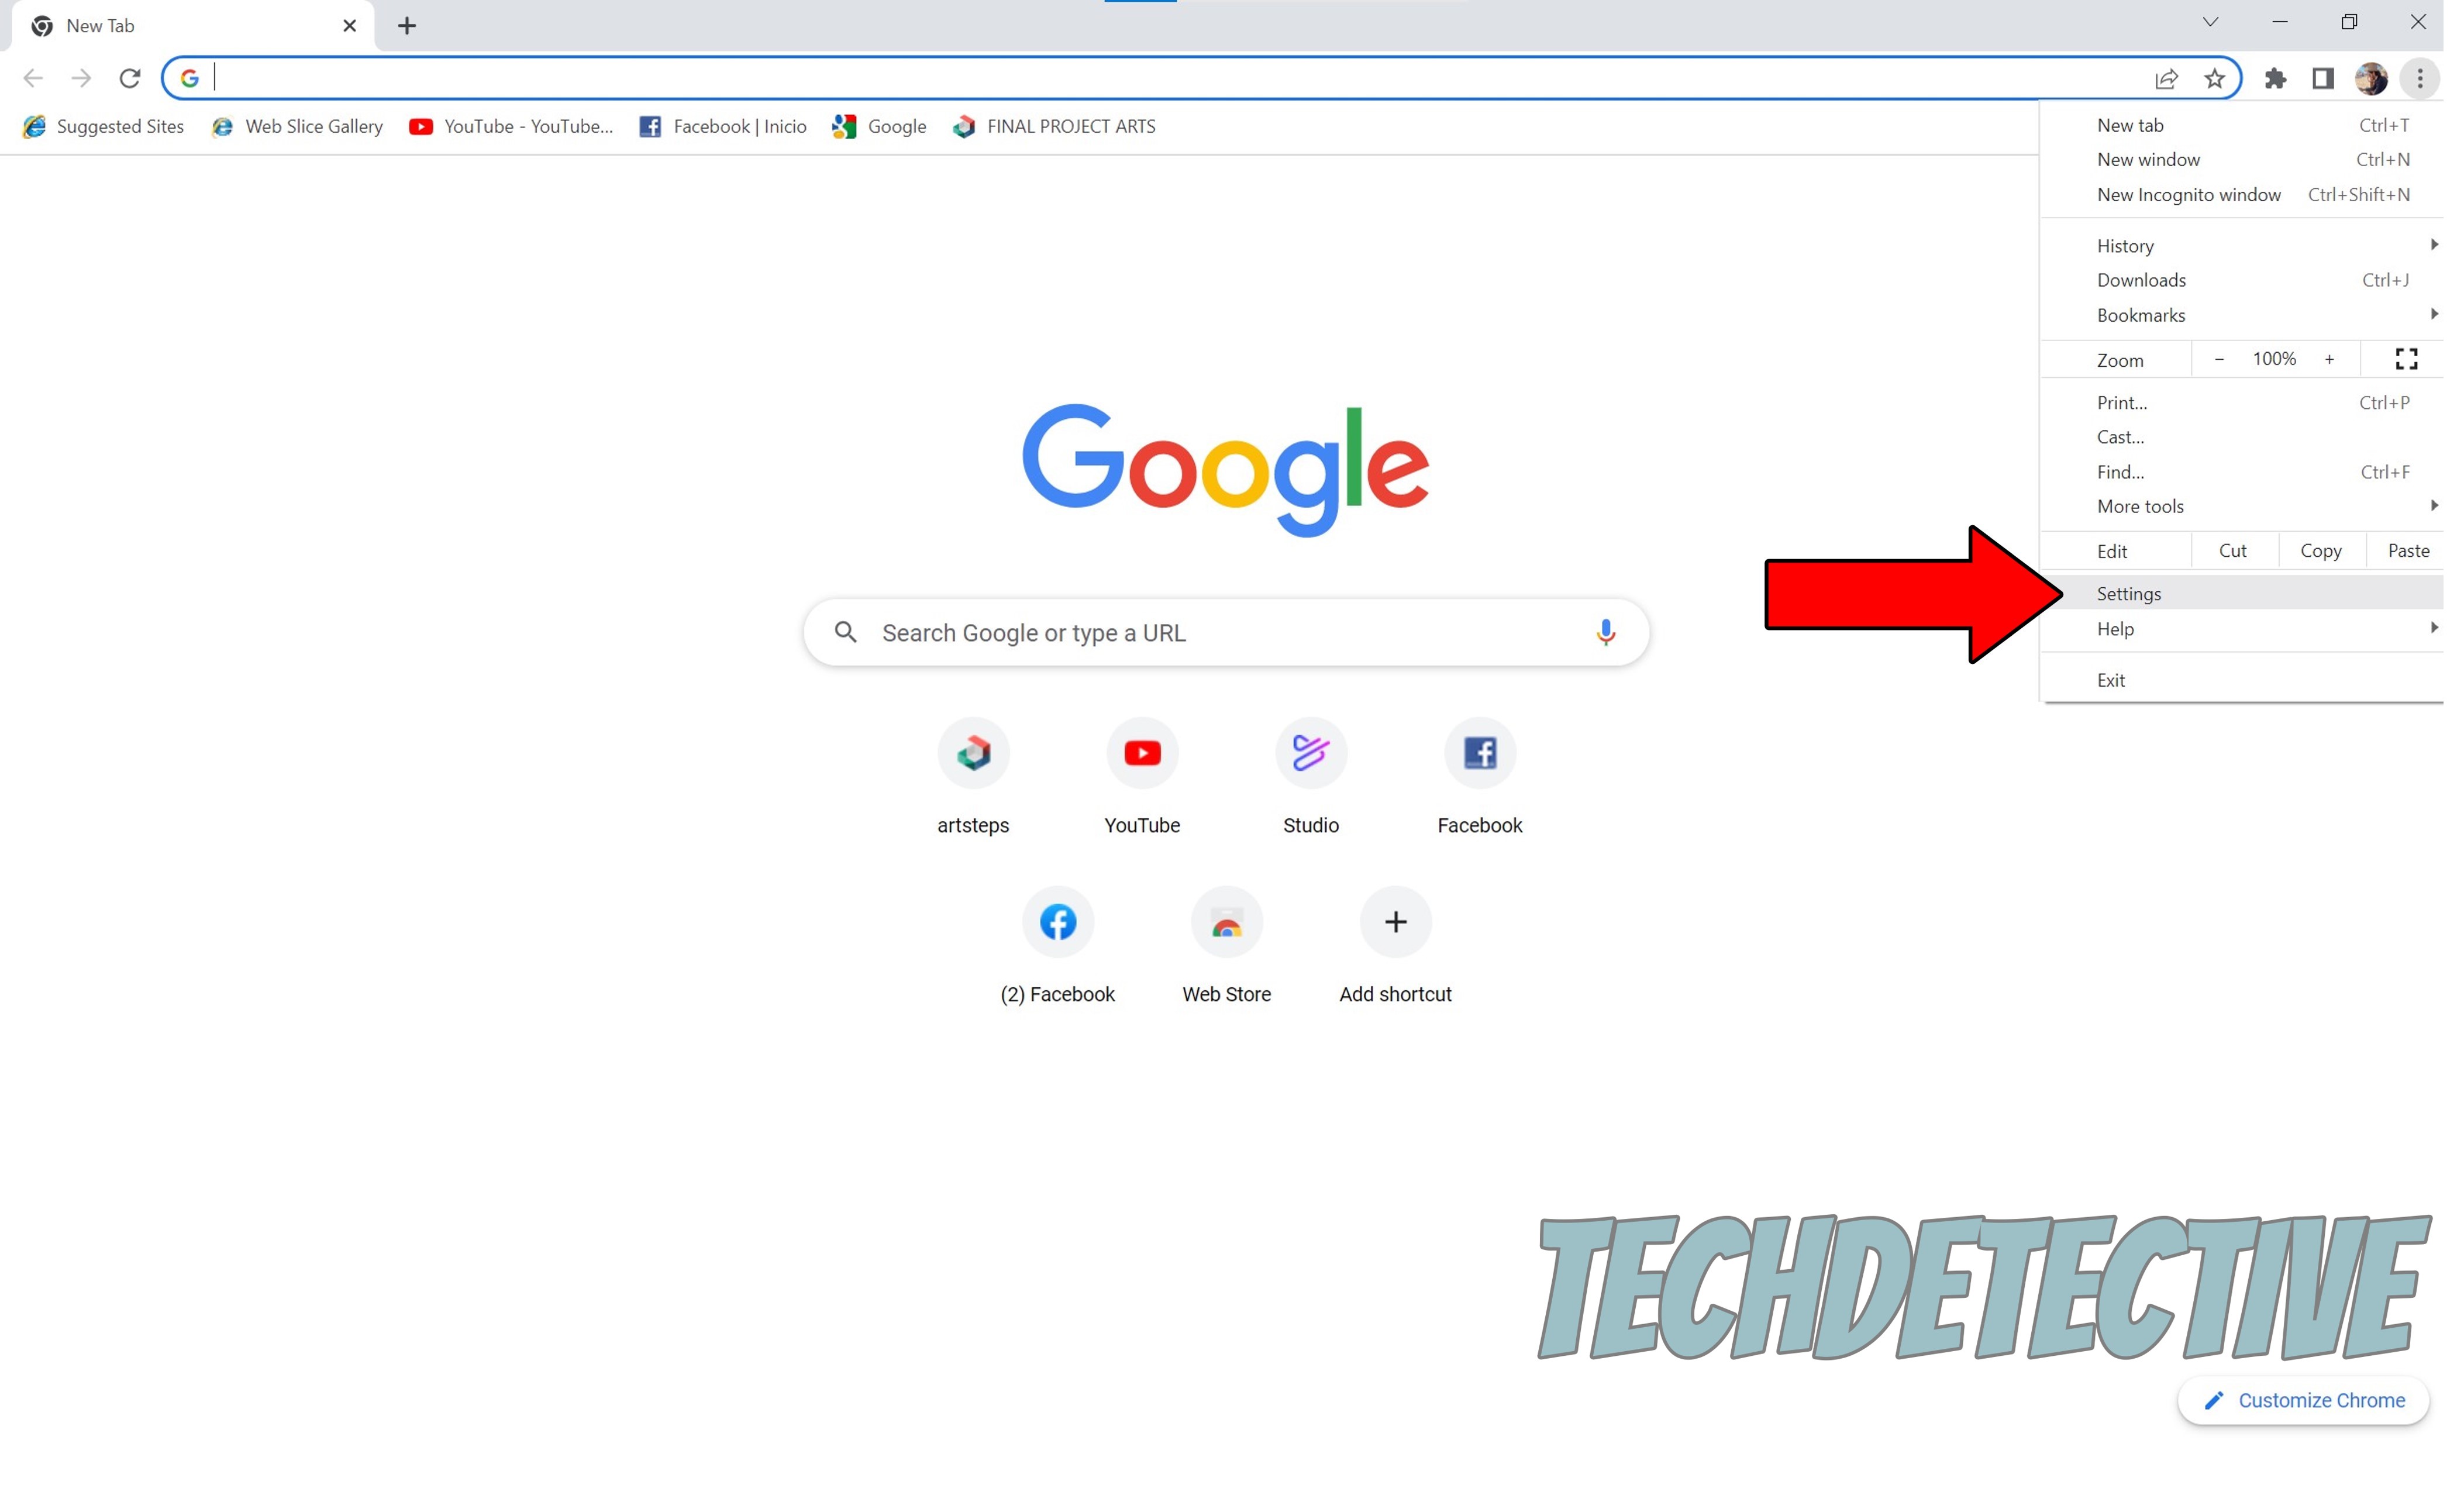 How to access Google Chrome's settings